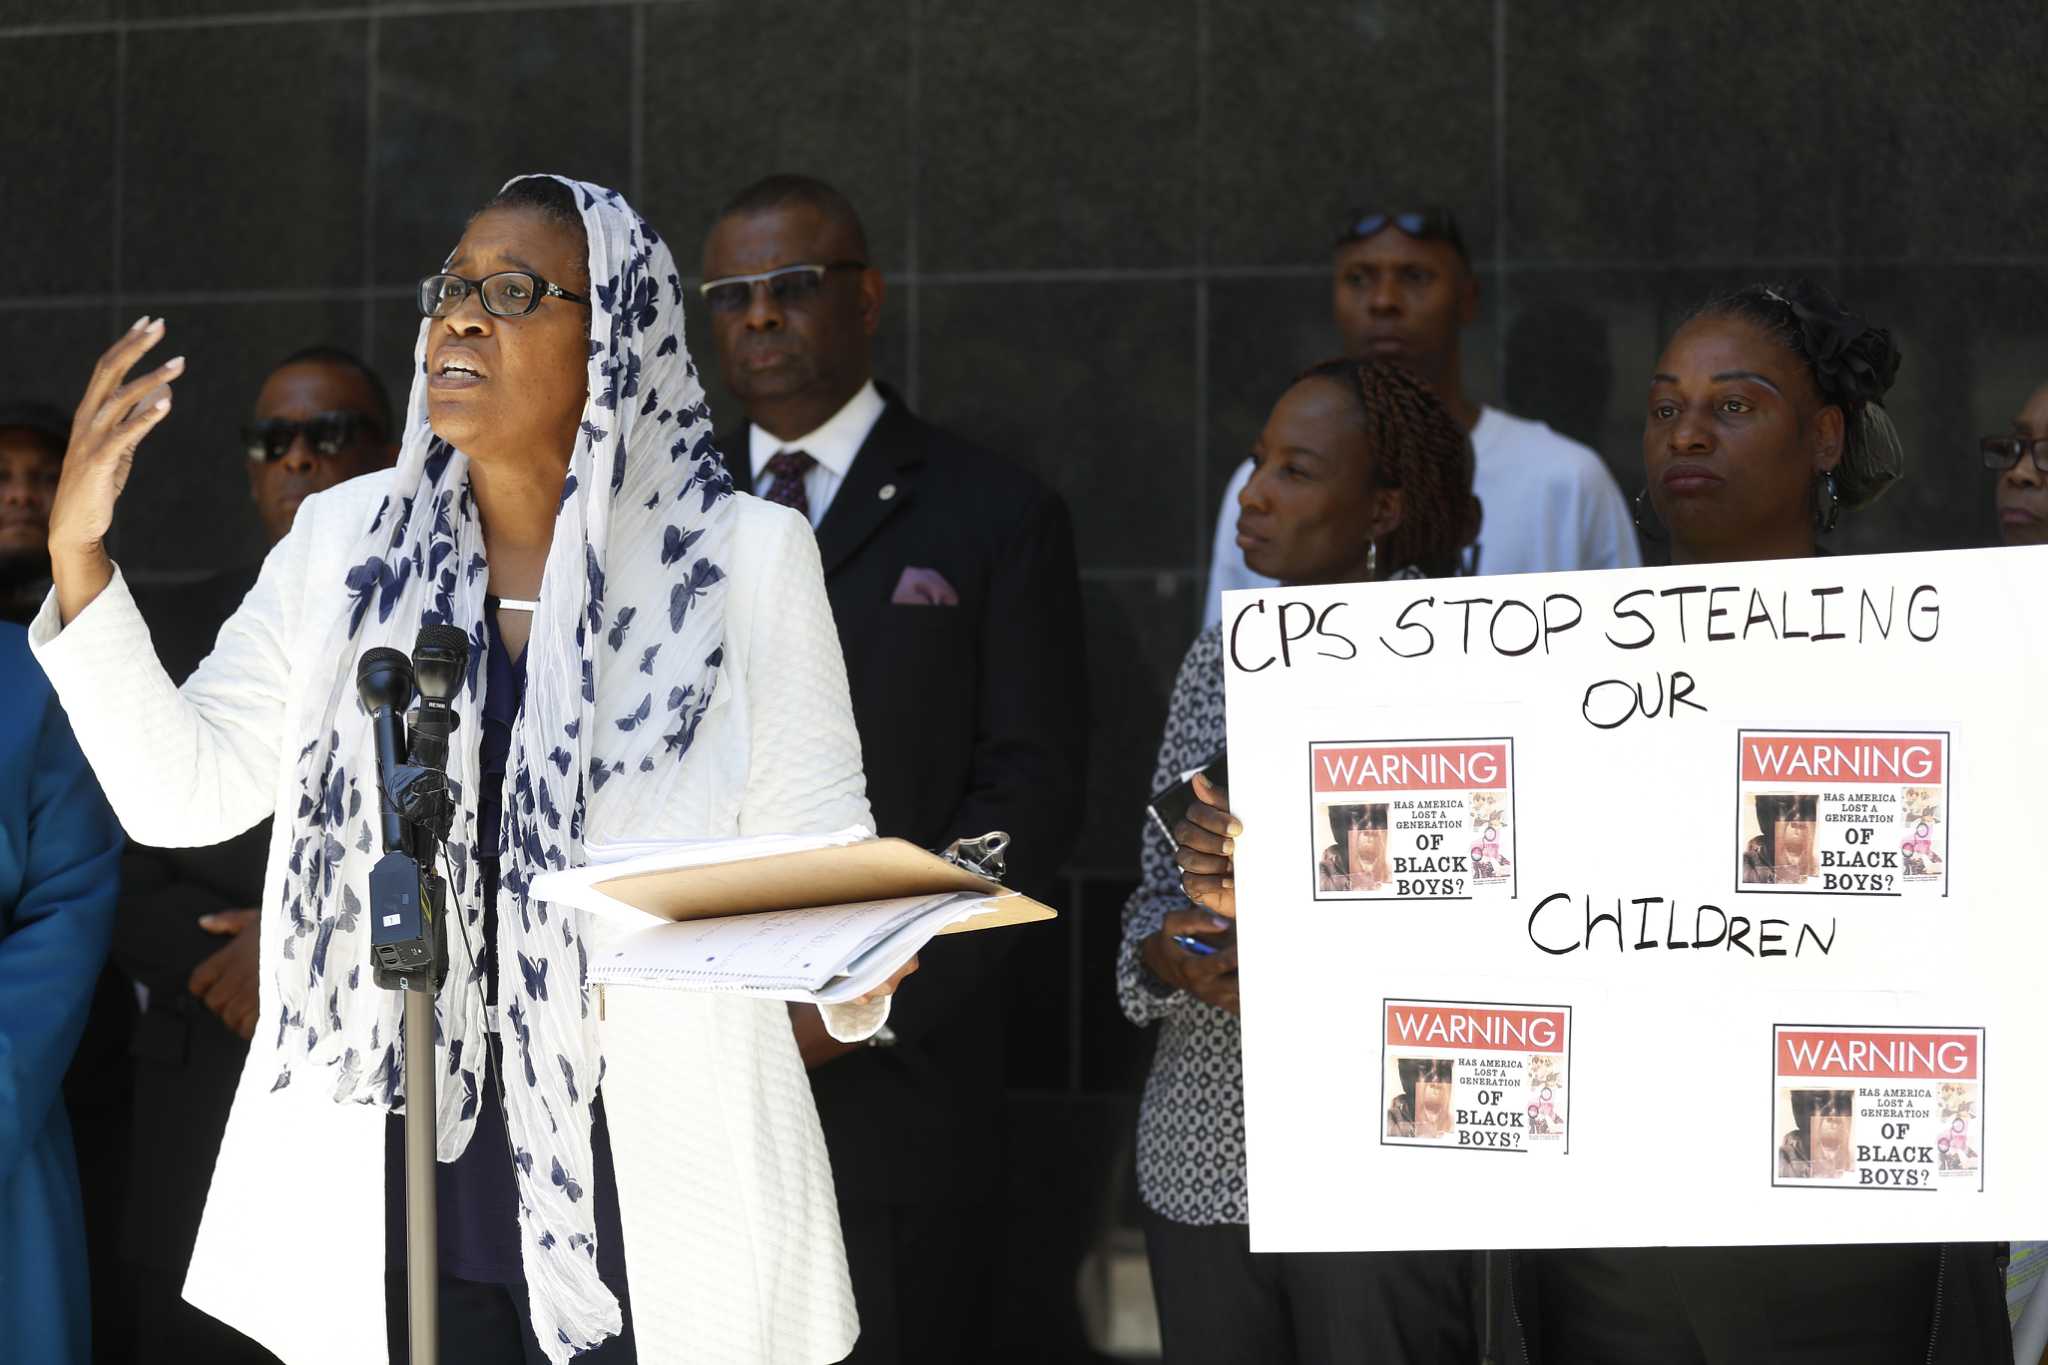 Federal lawsuit accuses CPS of discriminating against black children, families